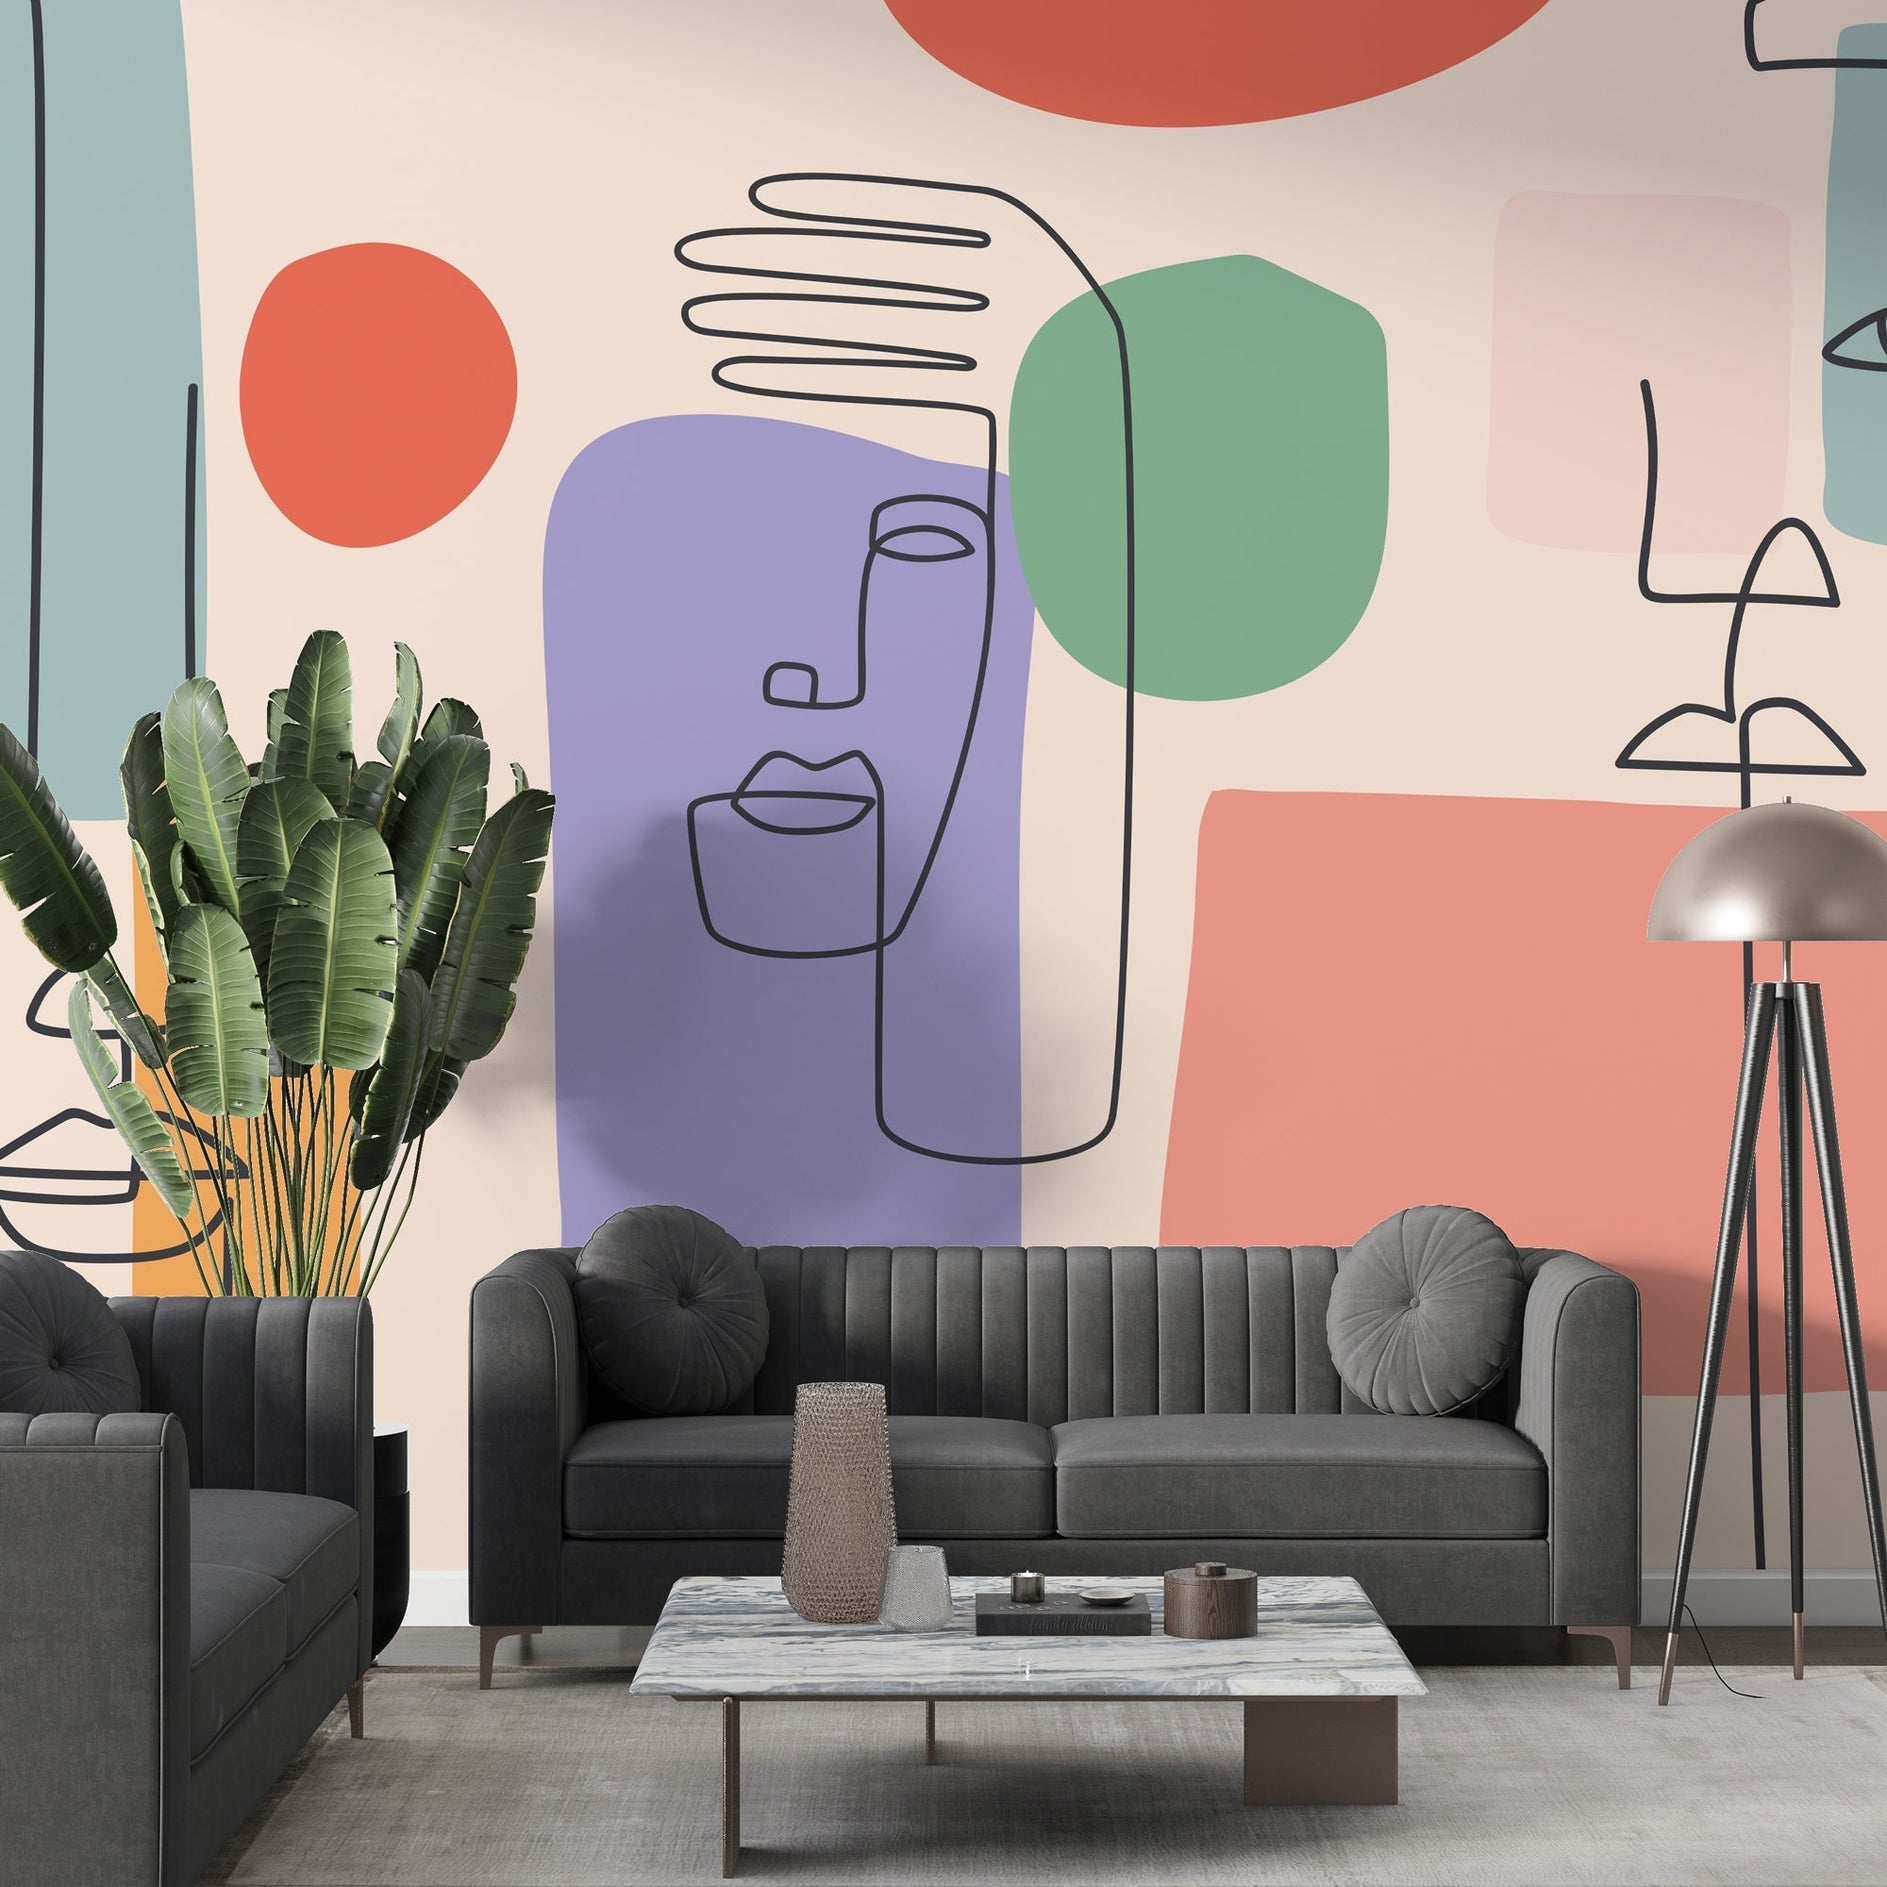 Matisse Wallpaper Mural: Vibrant Artistry for Your Walls - GraffitiWallArt